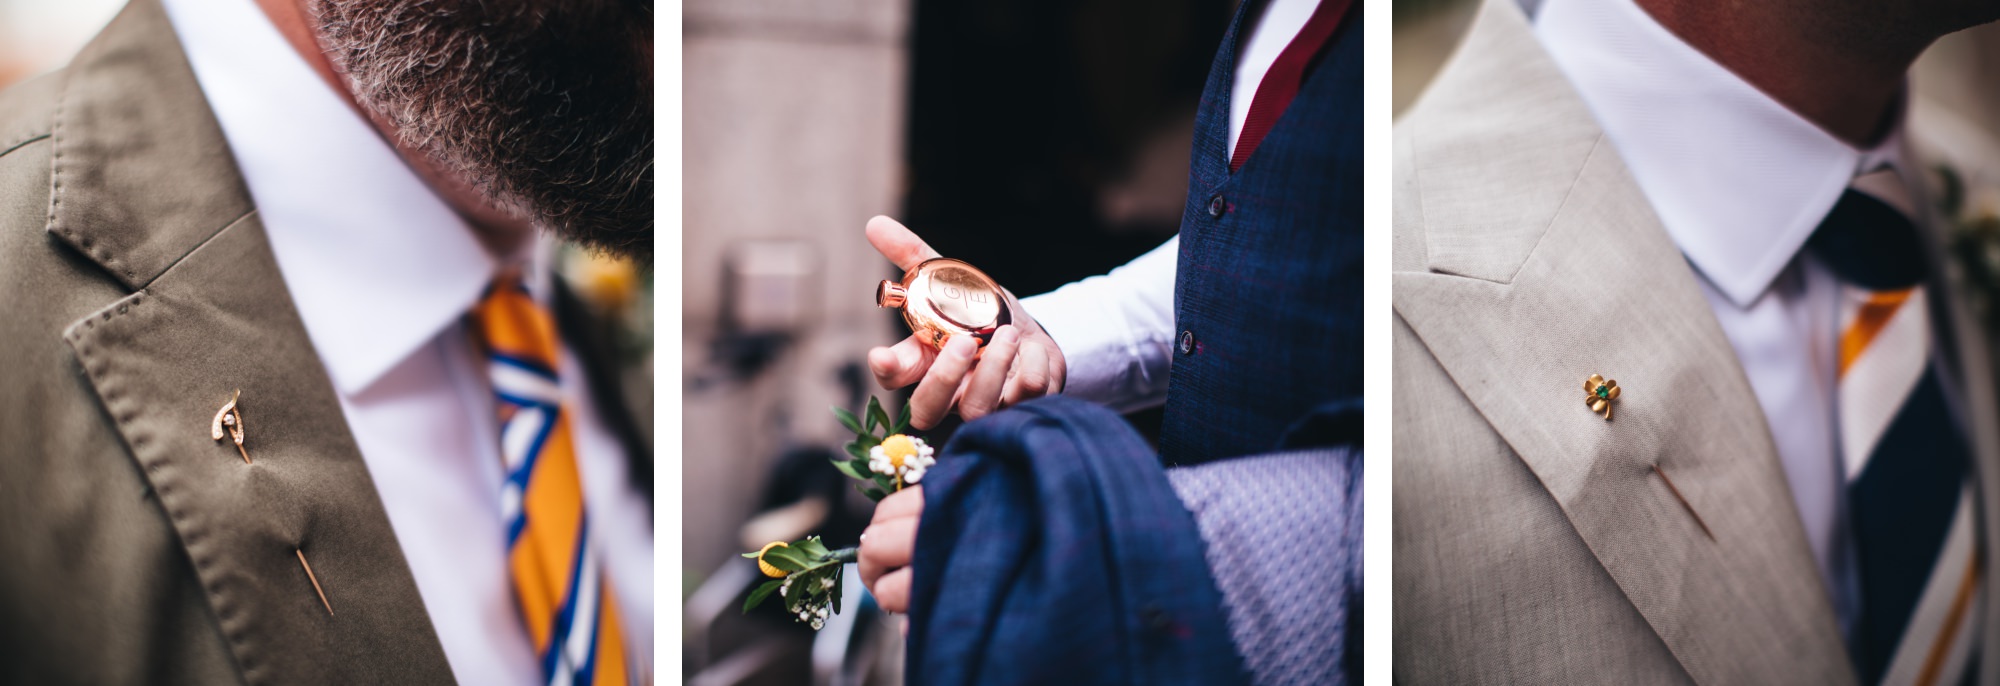 close groom wedding details, wedding suit lapel pins, hip flask